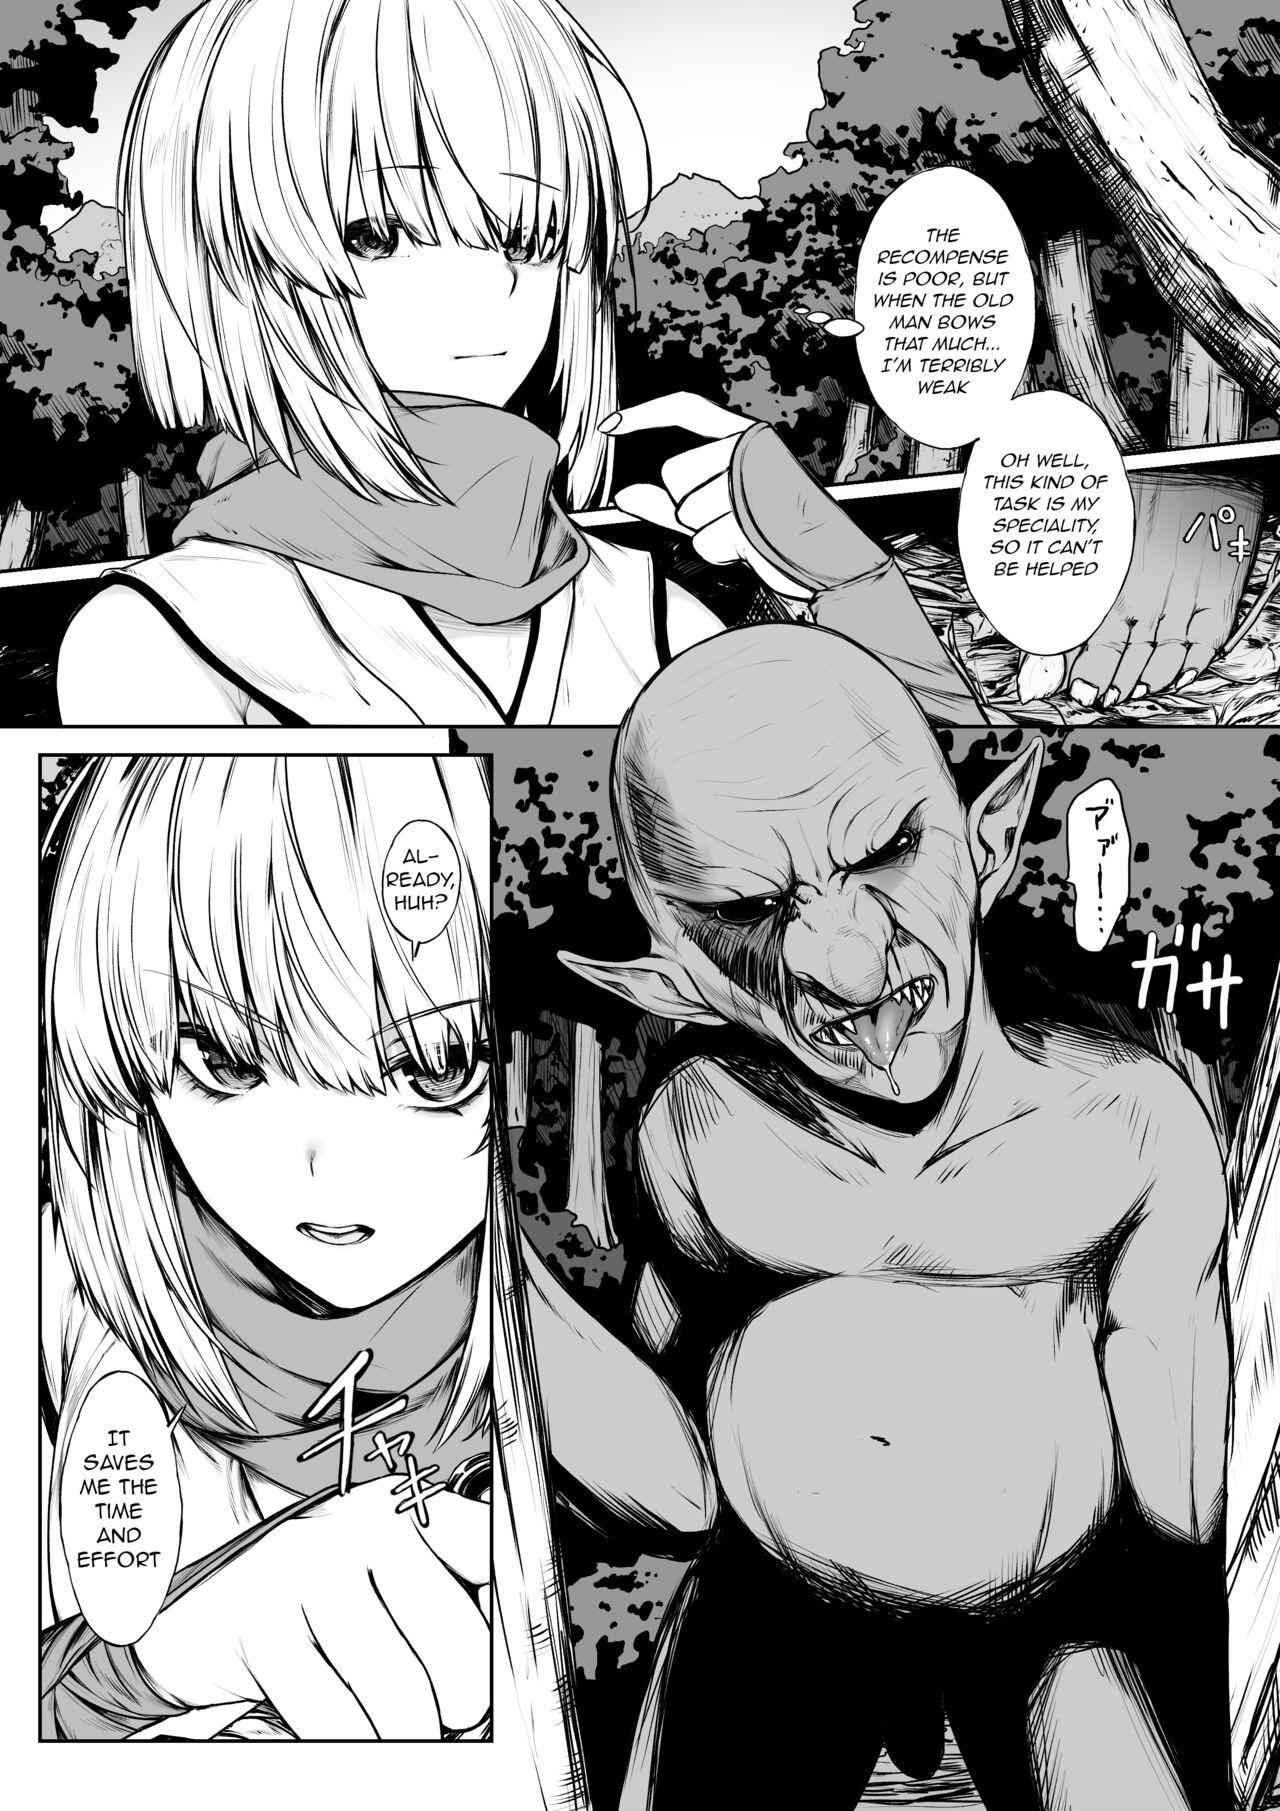 Kunoichi ga Goblin ni Makechau Hanashi | The Story Of The Female Ninja Succumbing To Goblins 1